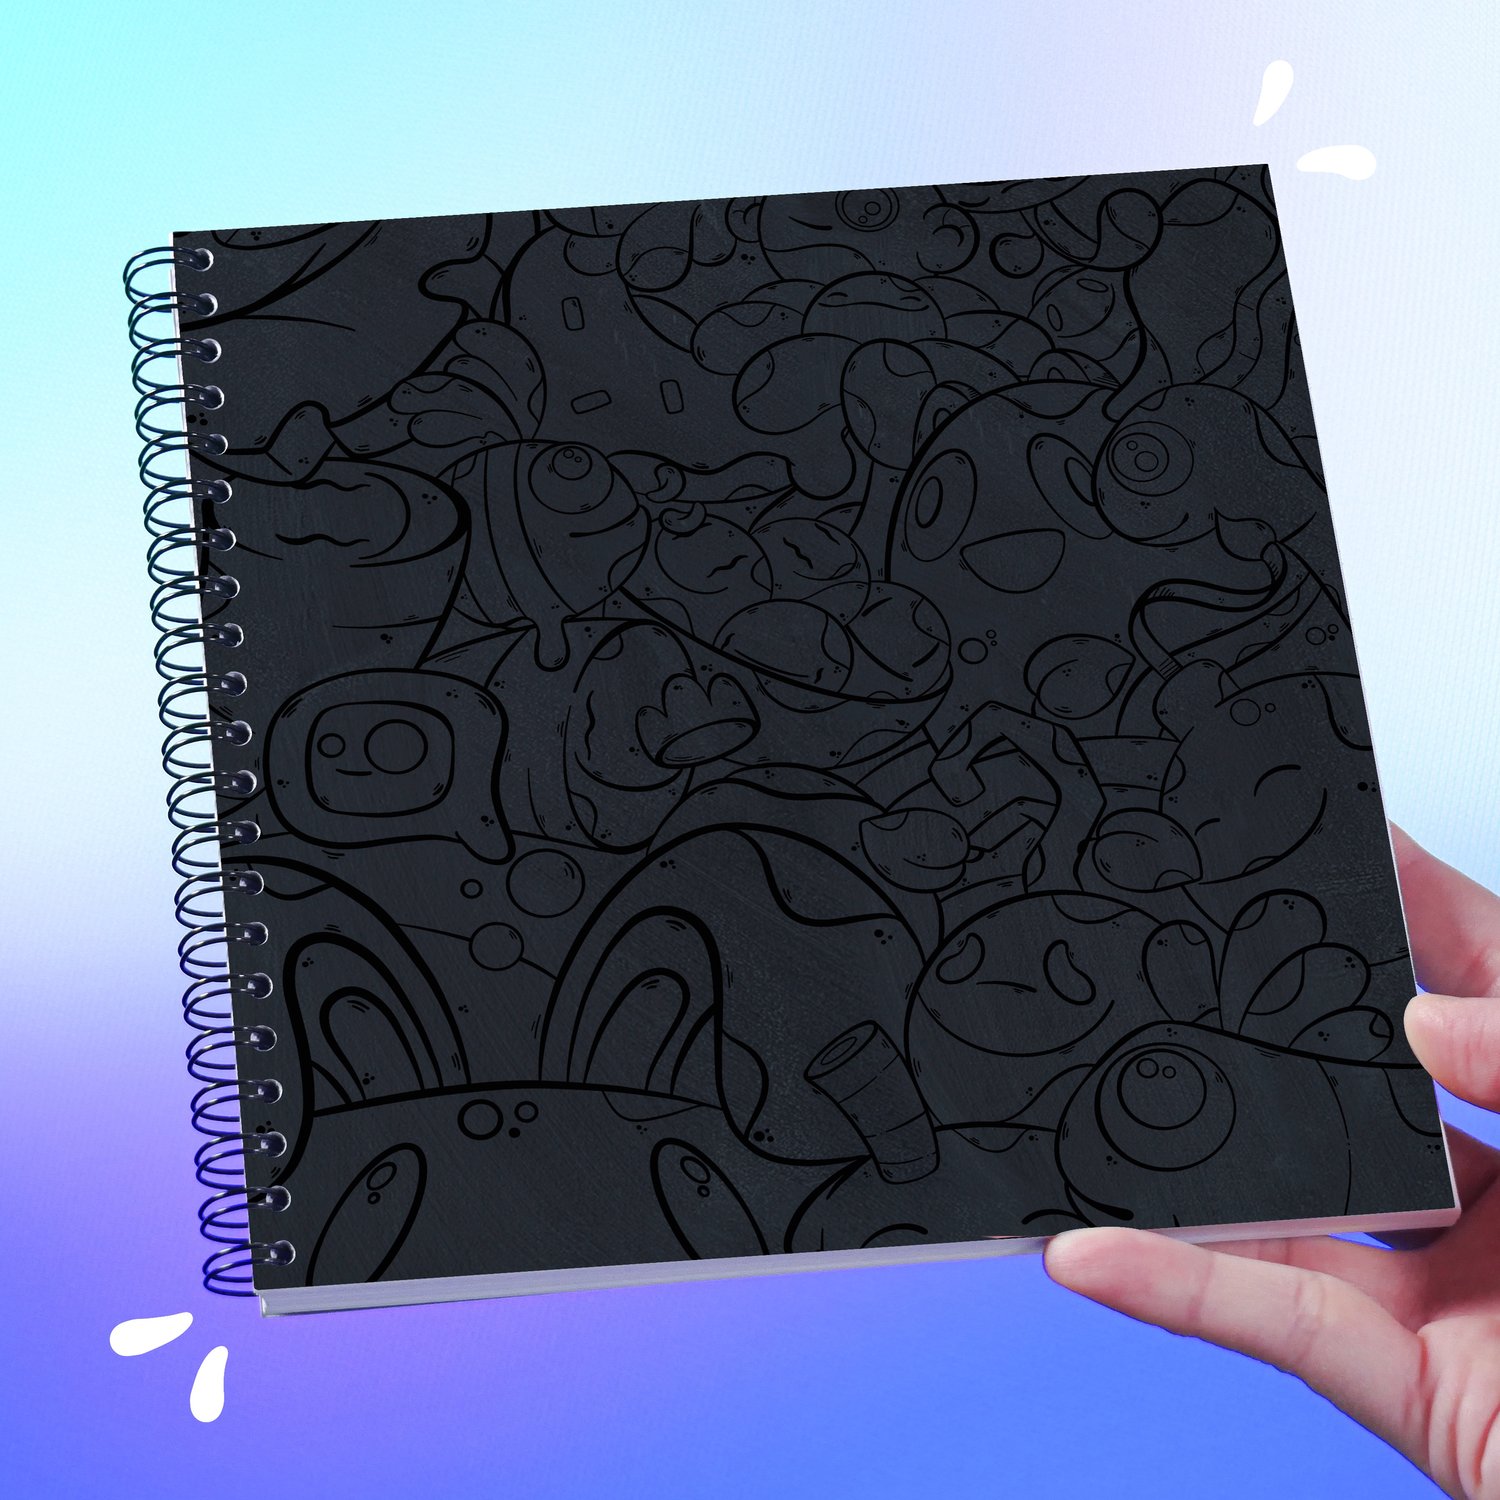 Sketchbook with Black Doodle Cover — Angela Kalokairinou